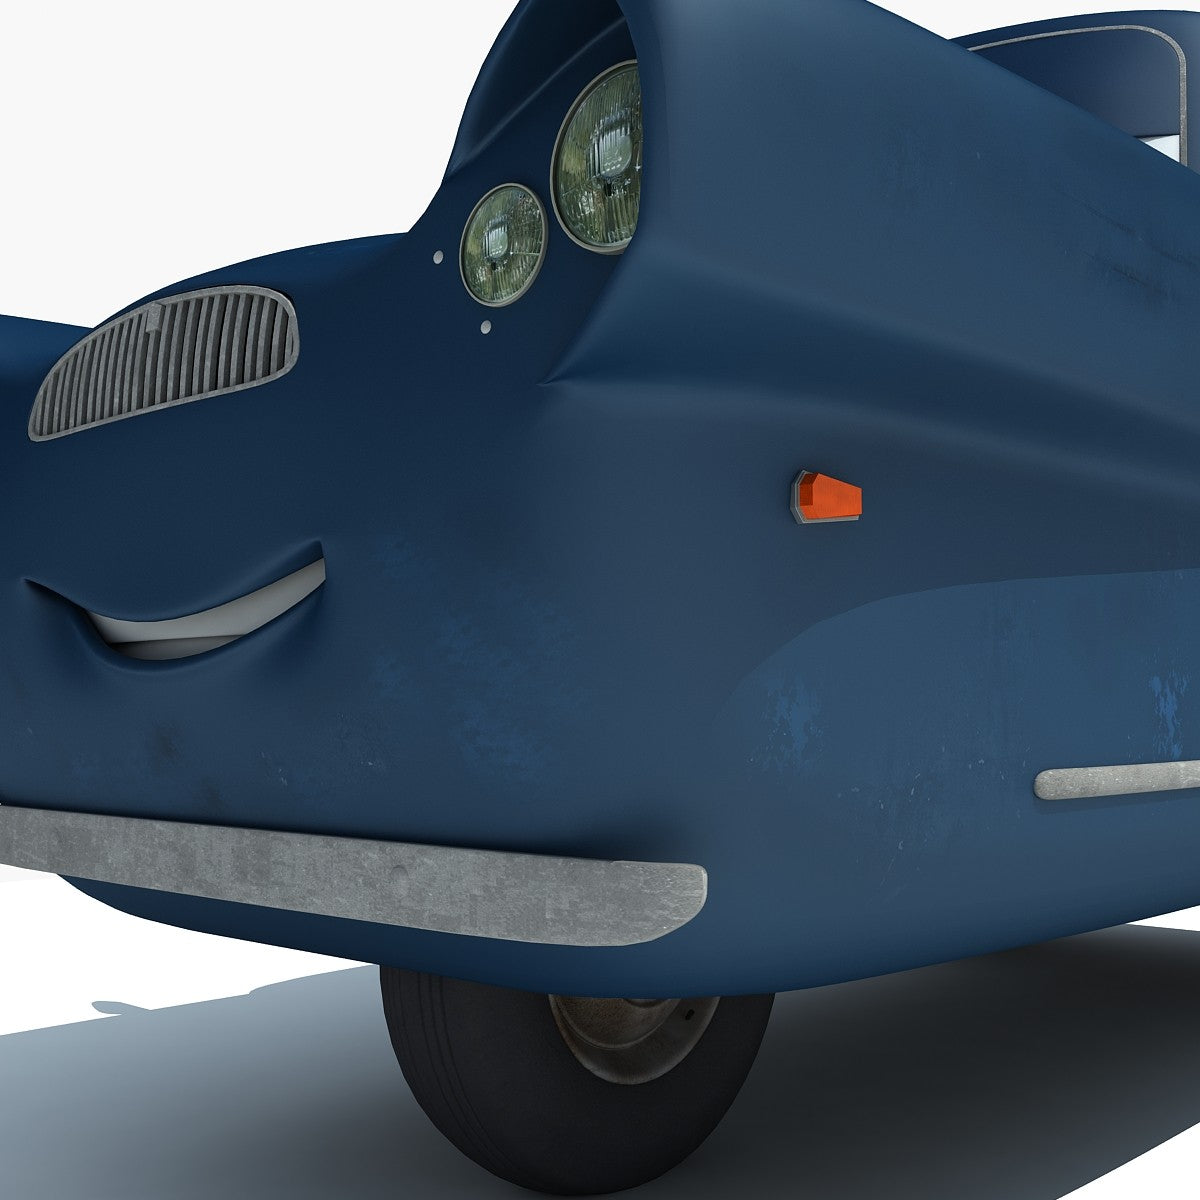 Pixar Walt Disney Cars 2 - Tomber